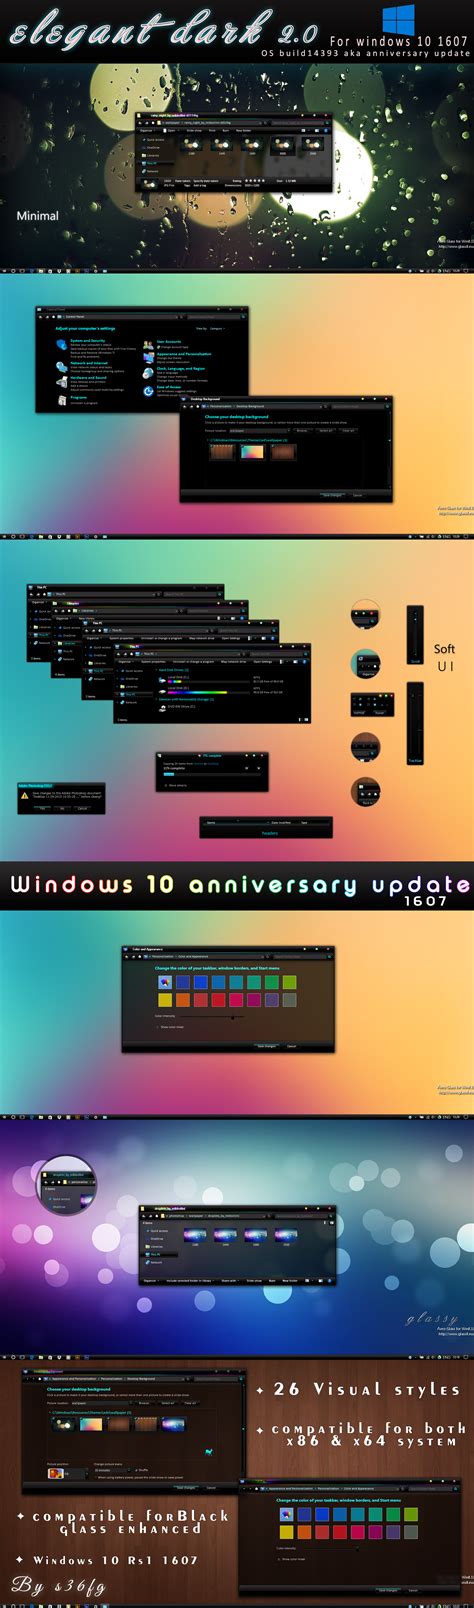 Elegant dark 2.0 theme for windows 10 (1607) by swapnil36fg on DeviantArt